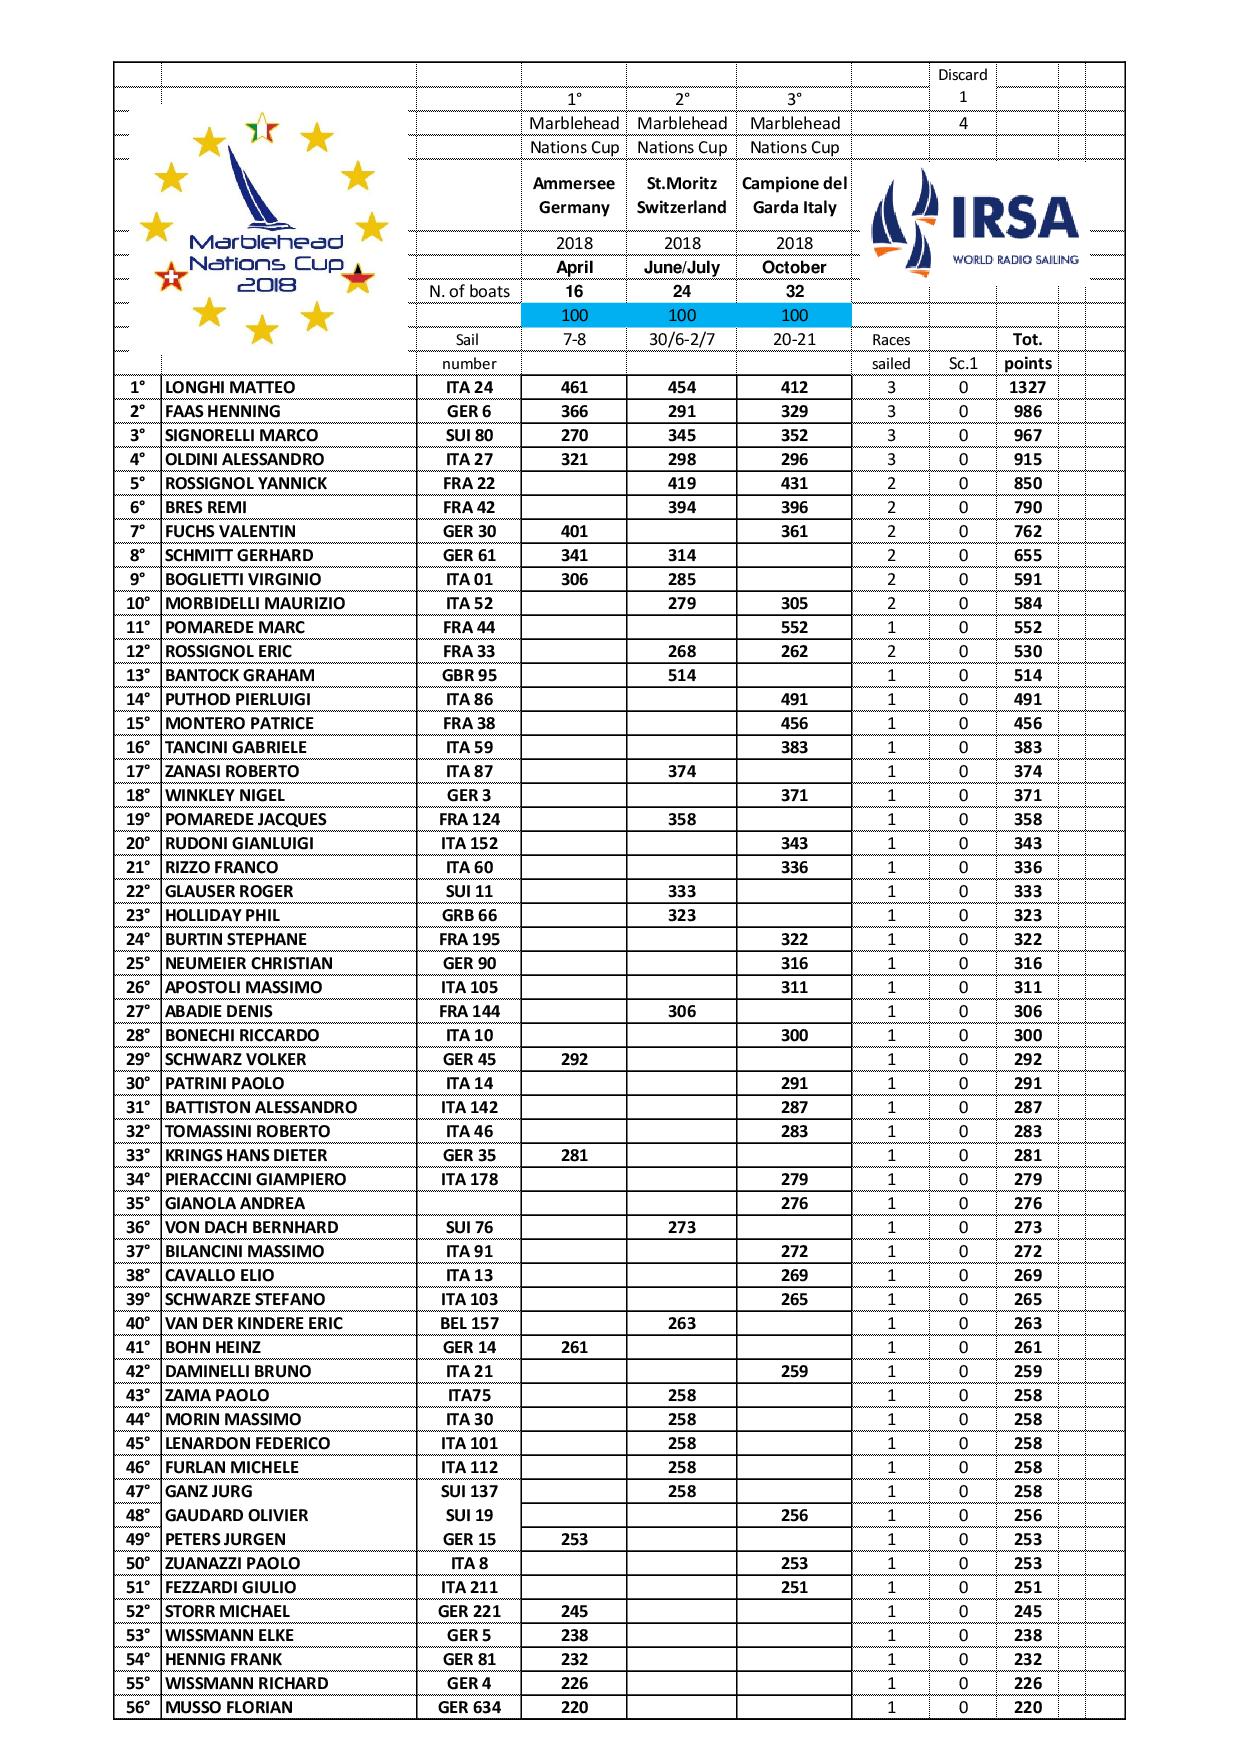 enc2018 marblehead ranking